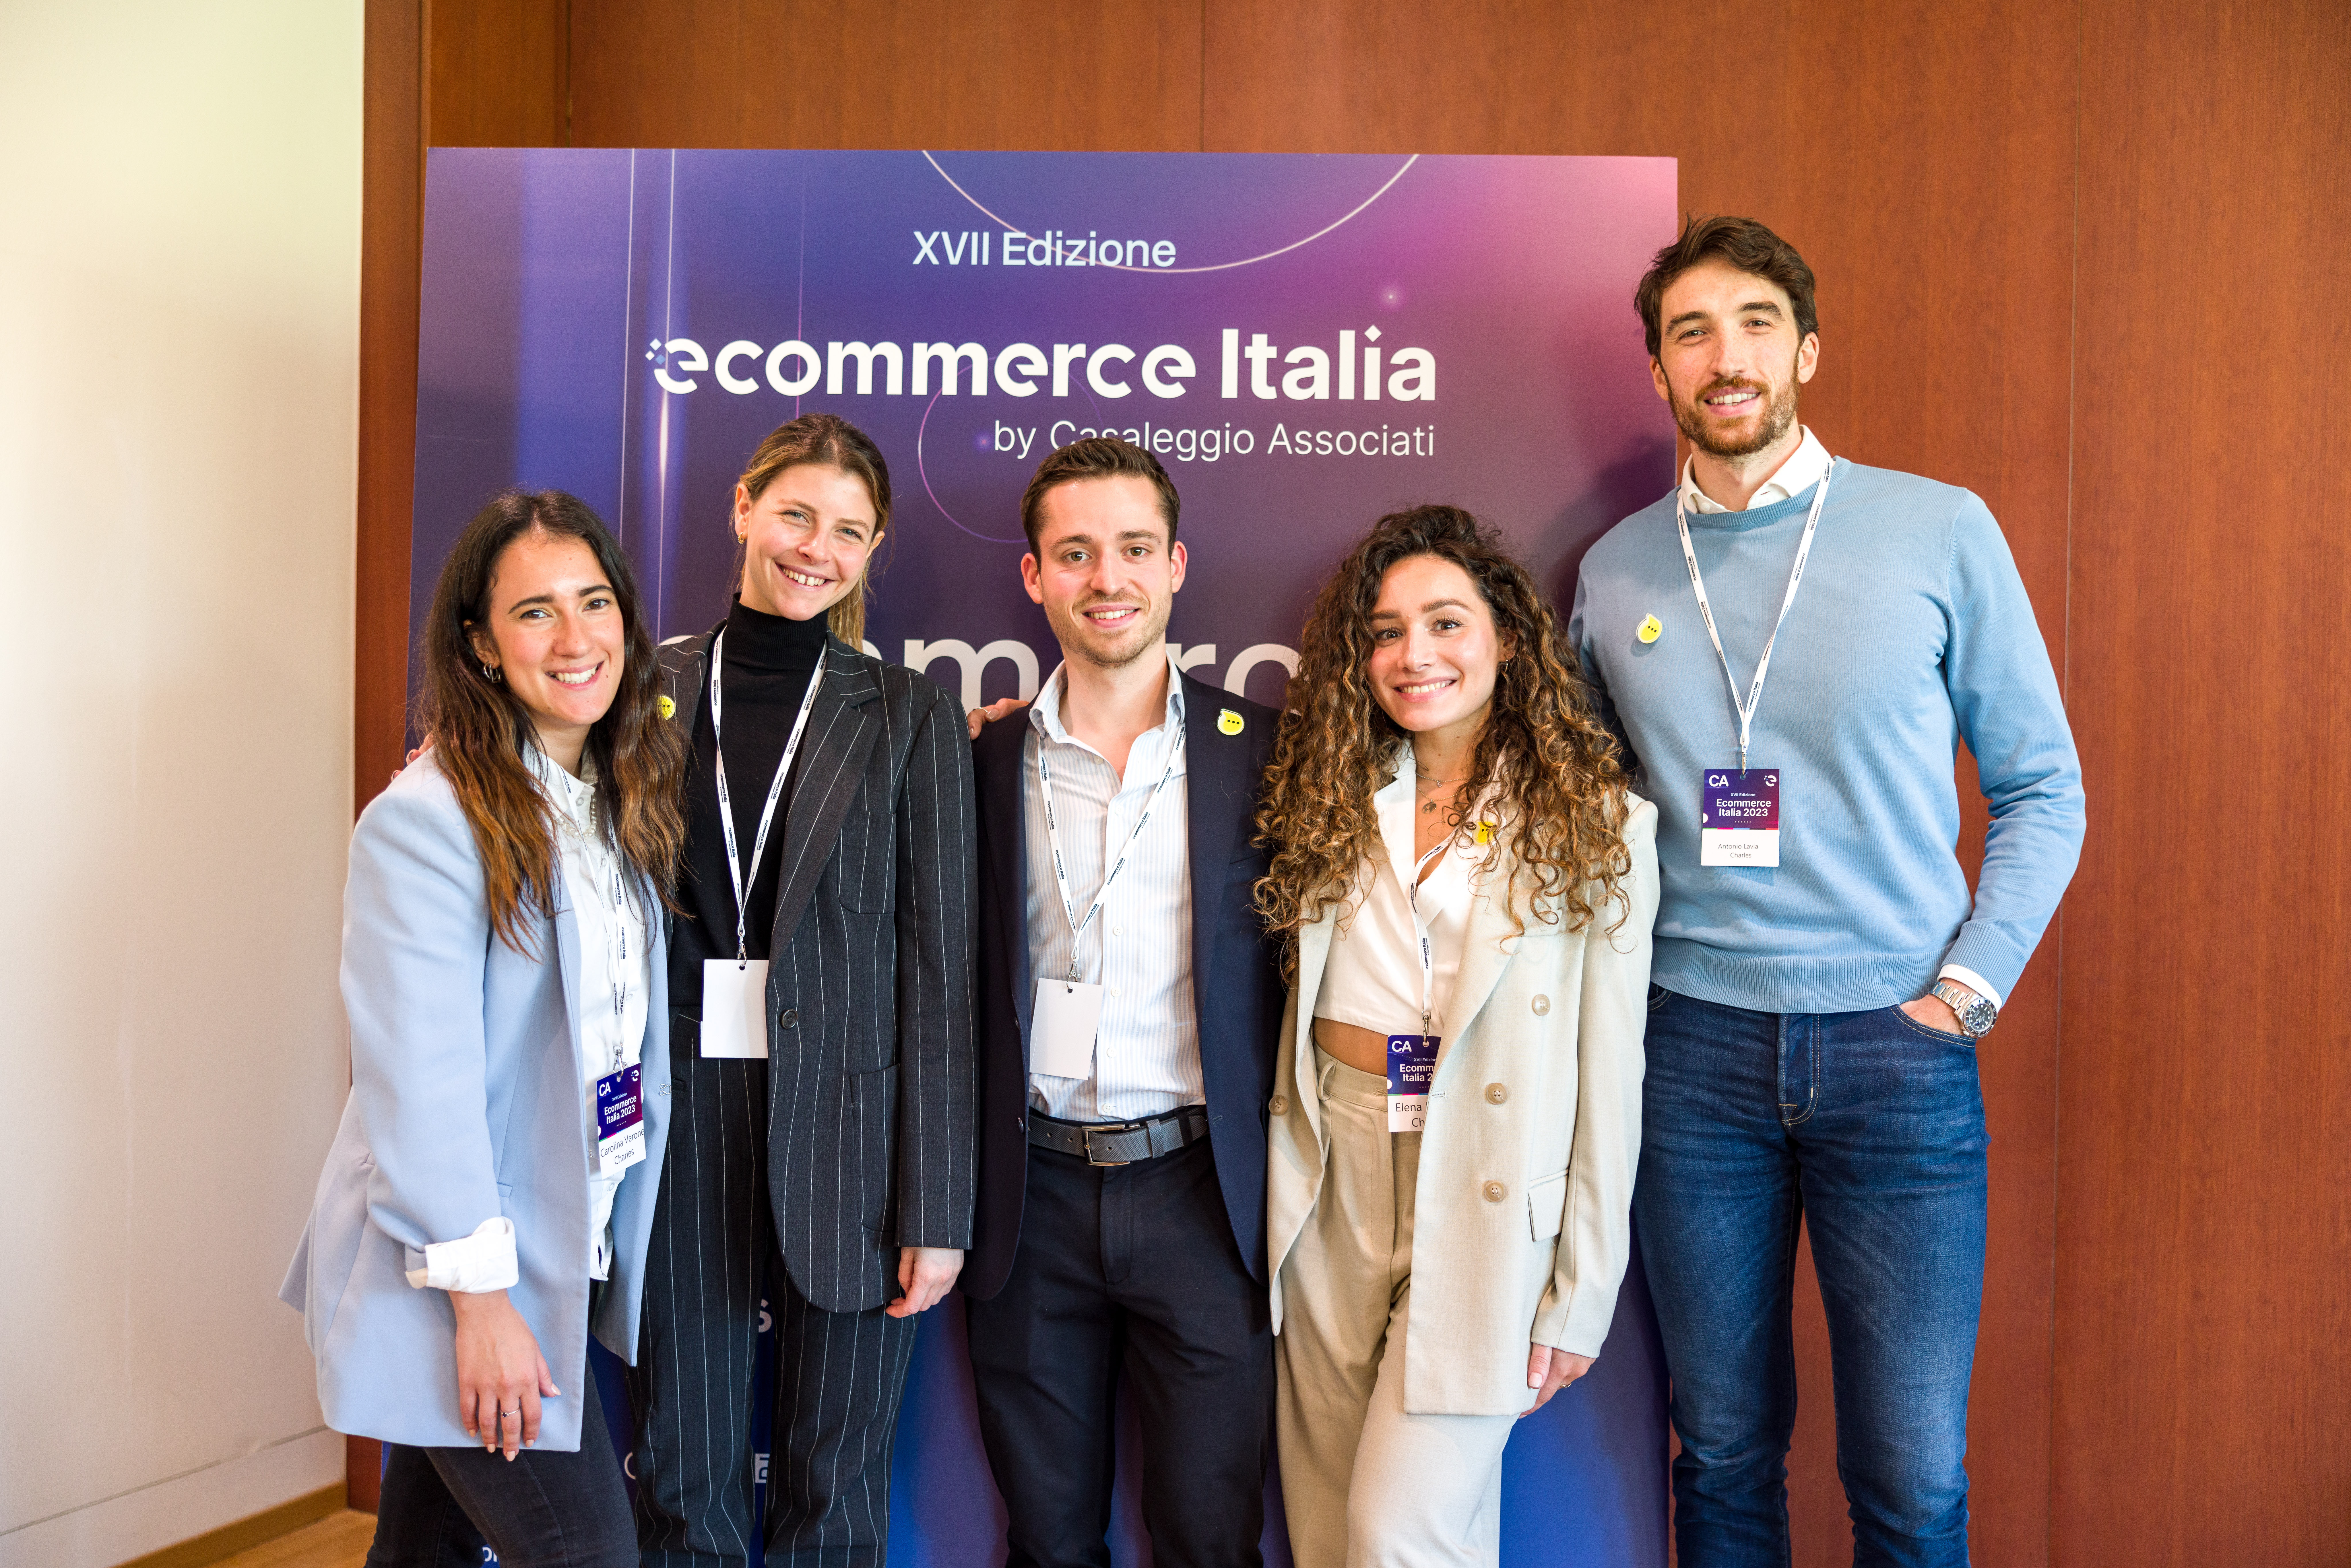 charles Italian team talking WhatsApp marketing at Ecommerce Italia